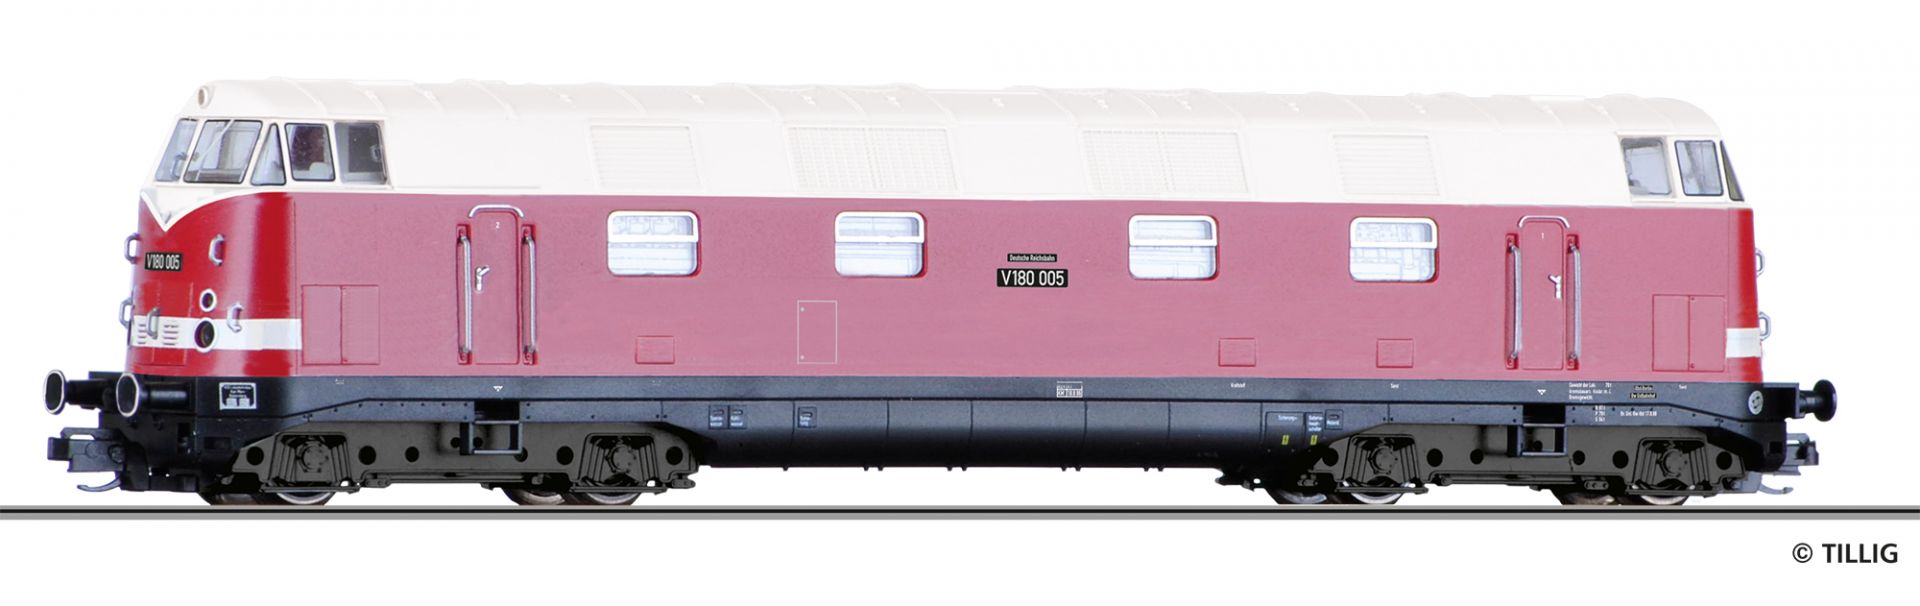 502268 | Diesel locomotive DR